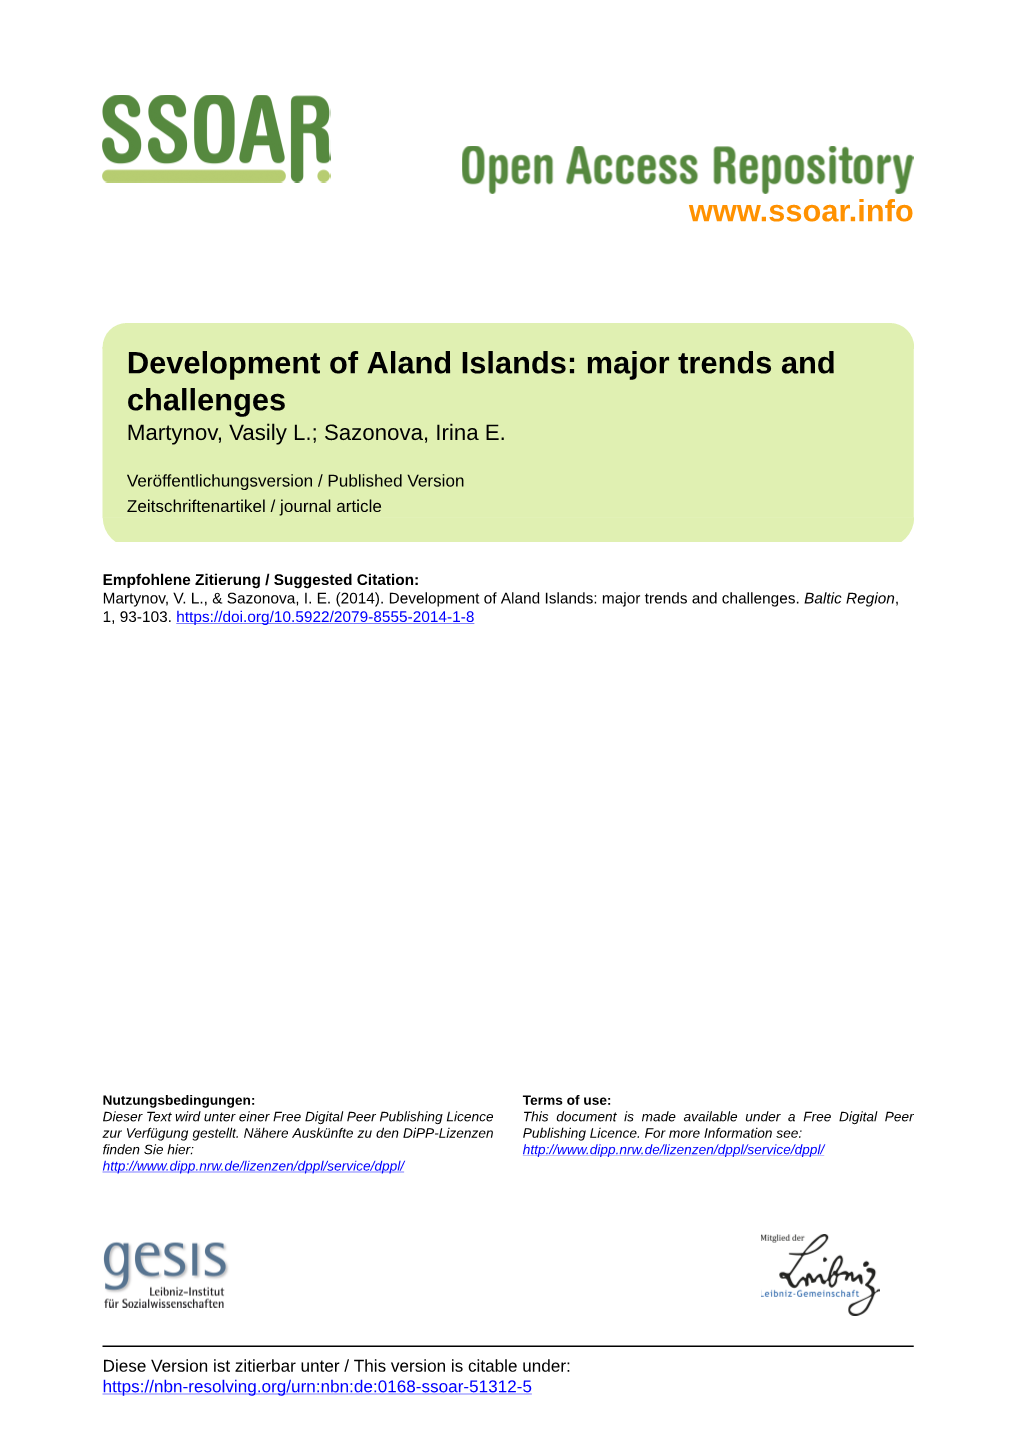 Development of Aland Islands: Major Trends and Challenges Martynov, Vasily L.; Sazonova, Irina E